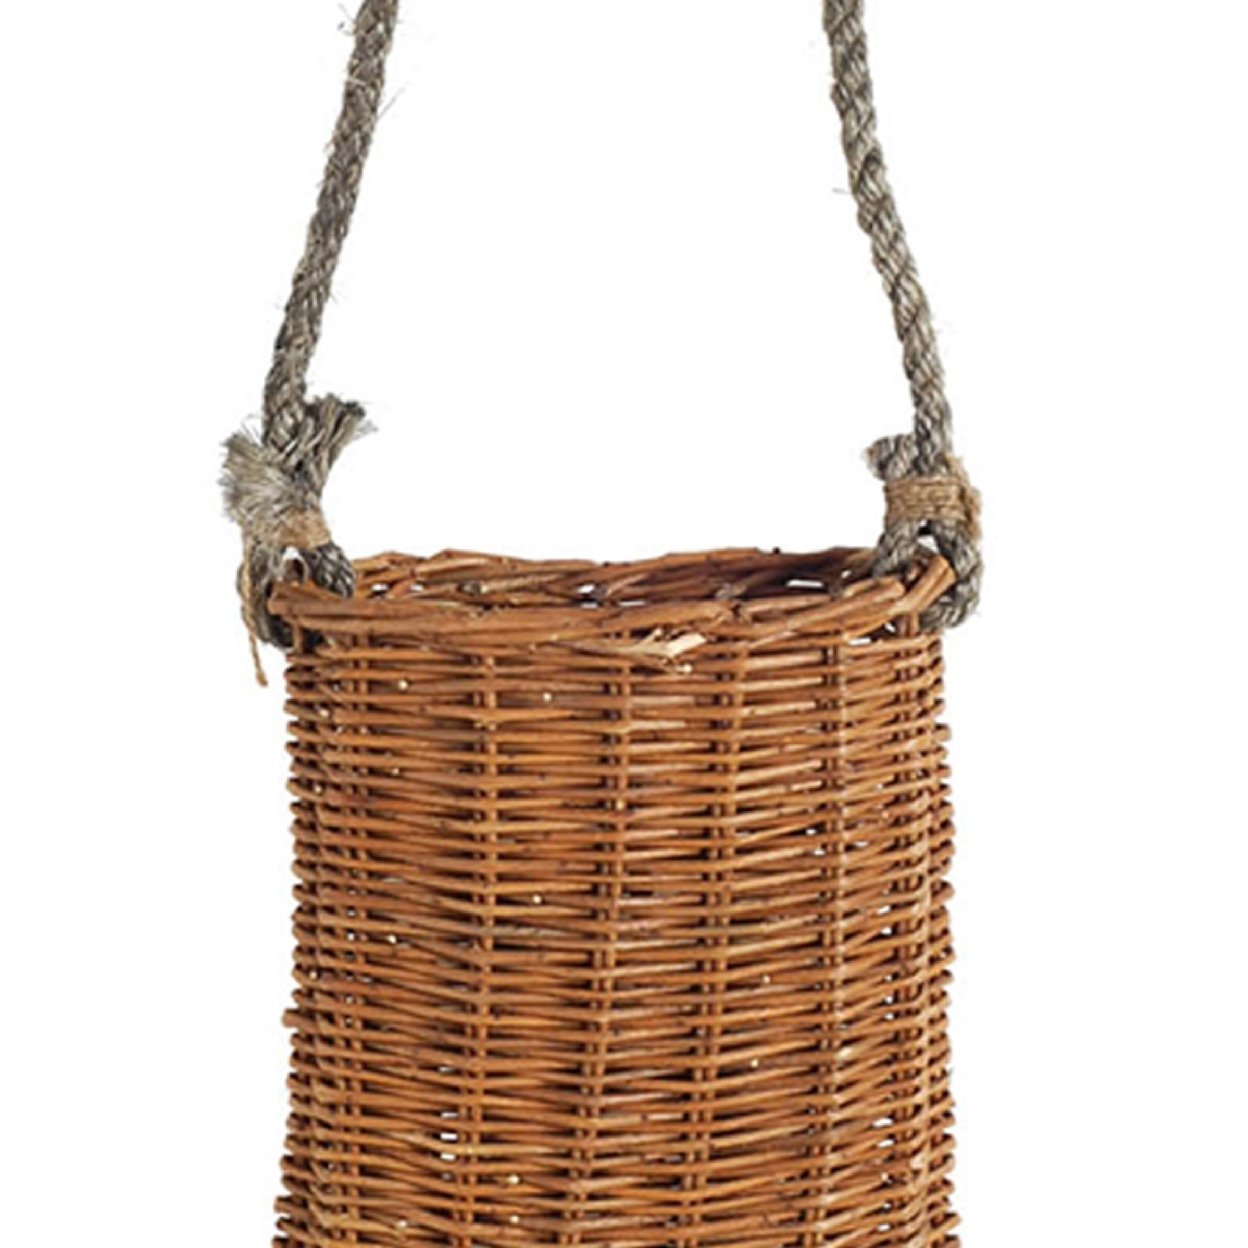 15 Inch Woven Wicker Basket With Rope Hanger, Large, Brown- Saltoro Sherpi